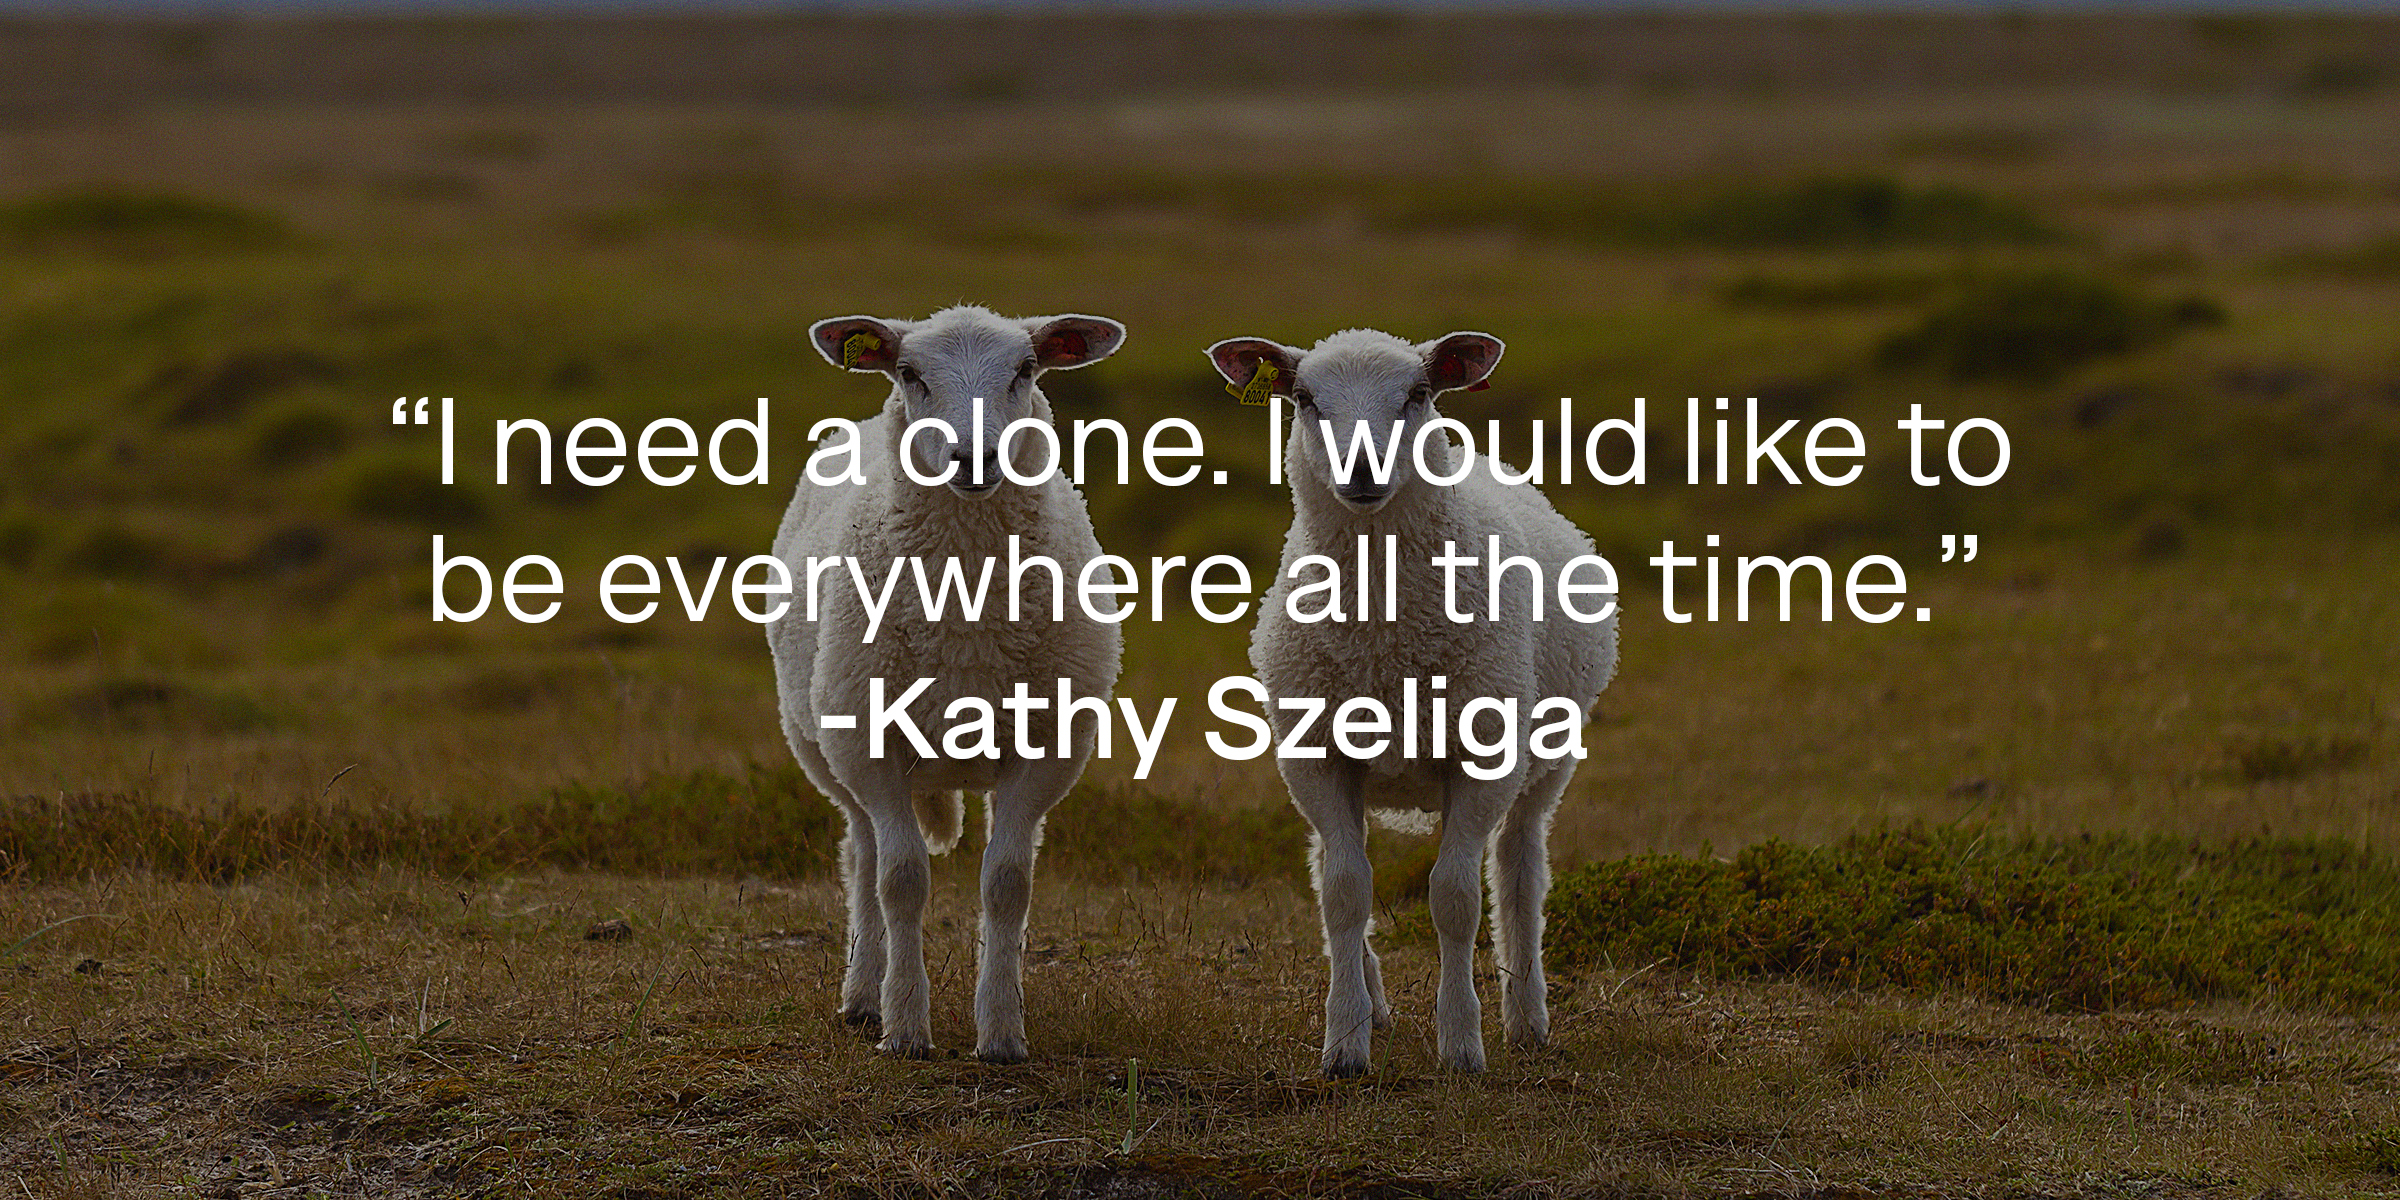 Kathy Szeliga's quote, "I need a clone. I would like to be everywhere all the time." | Image: Unsplash.com